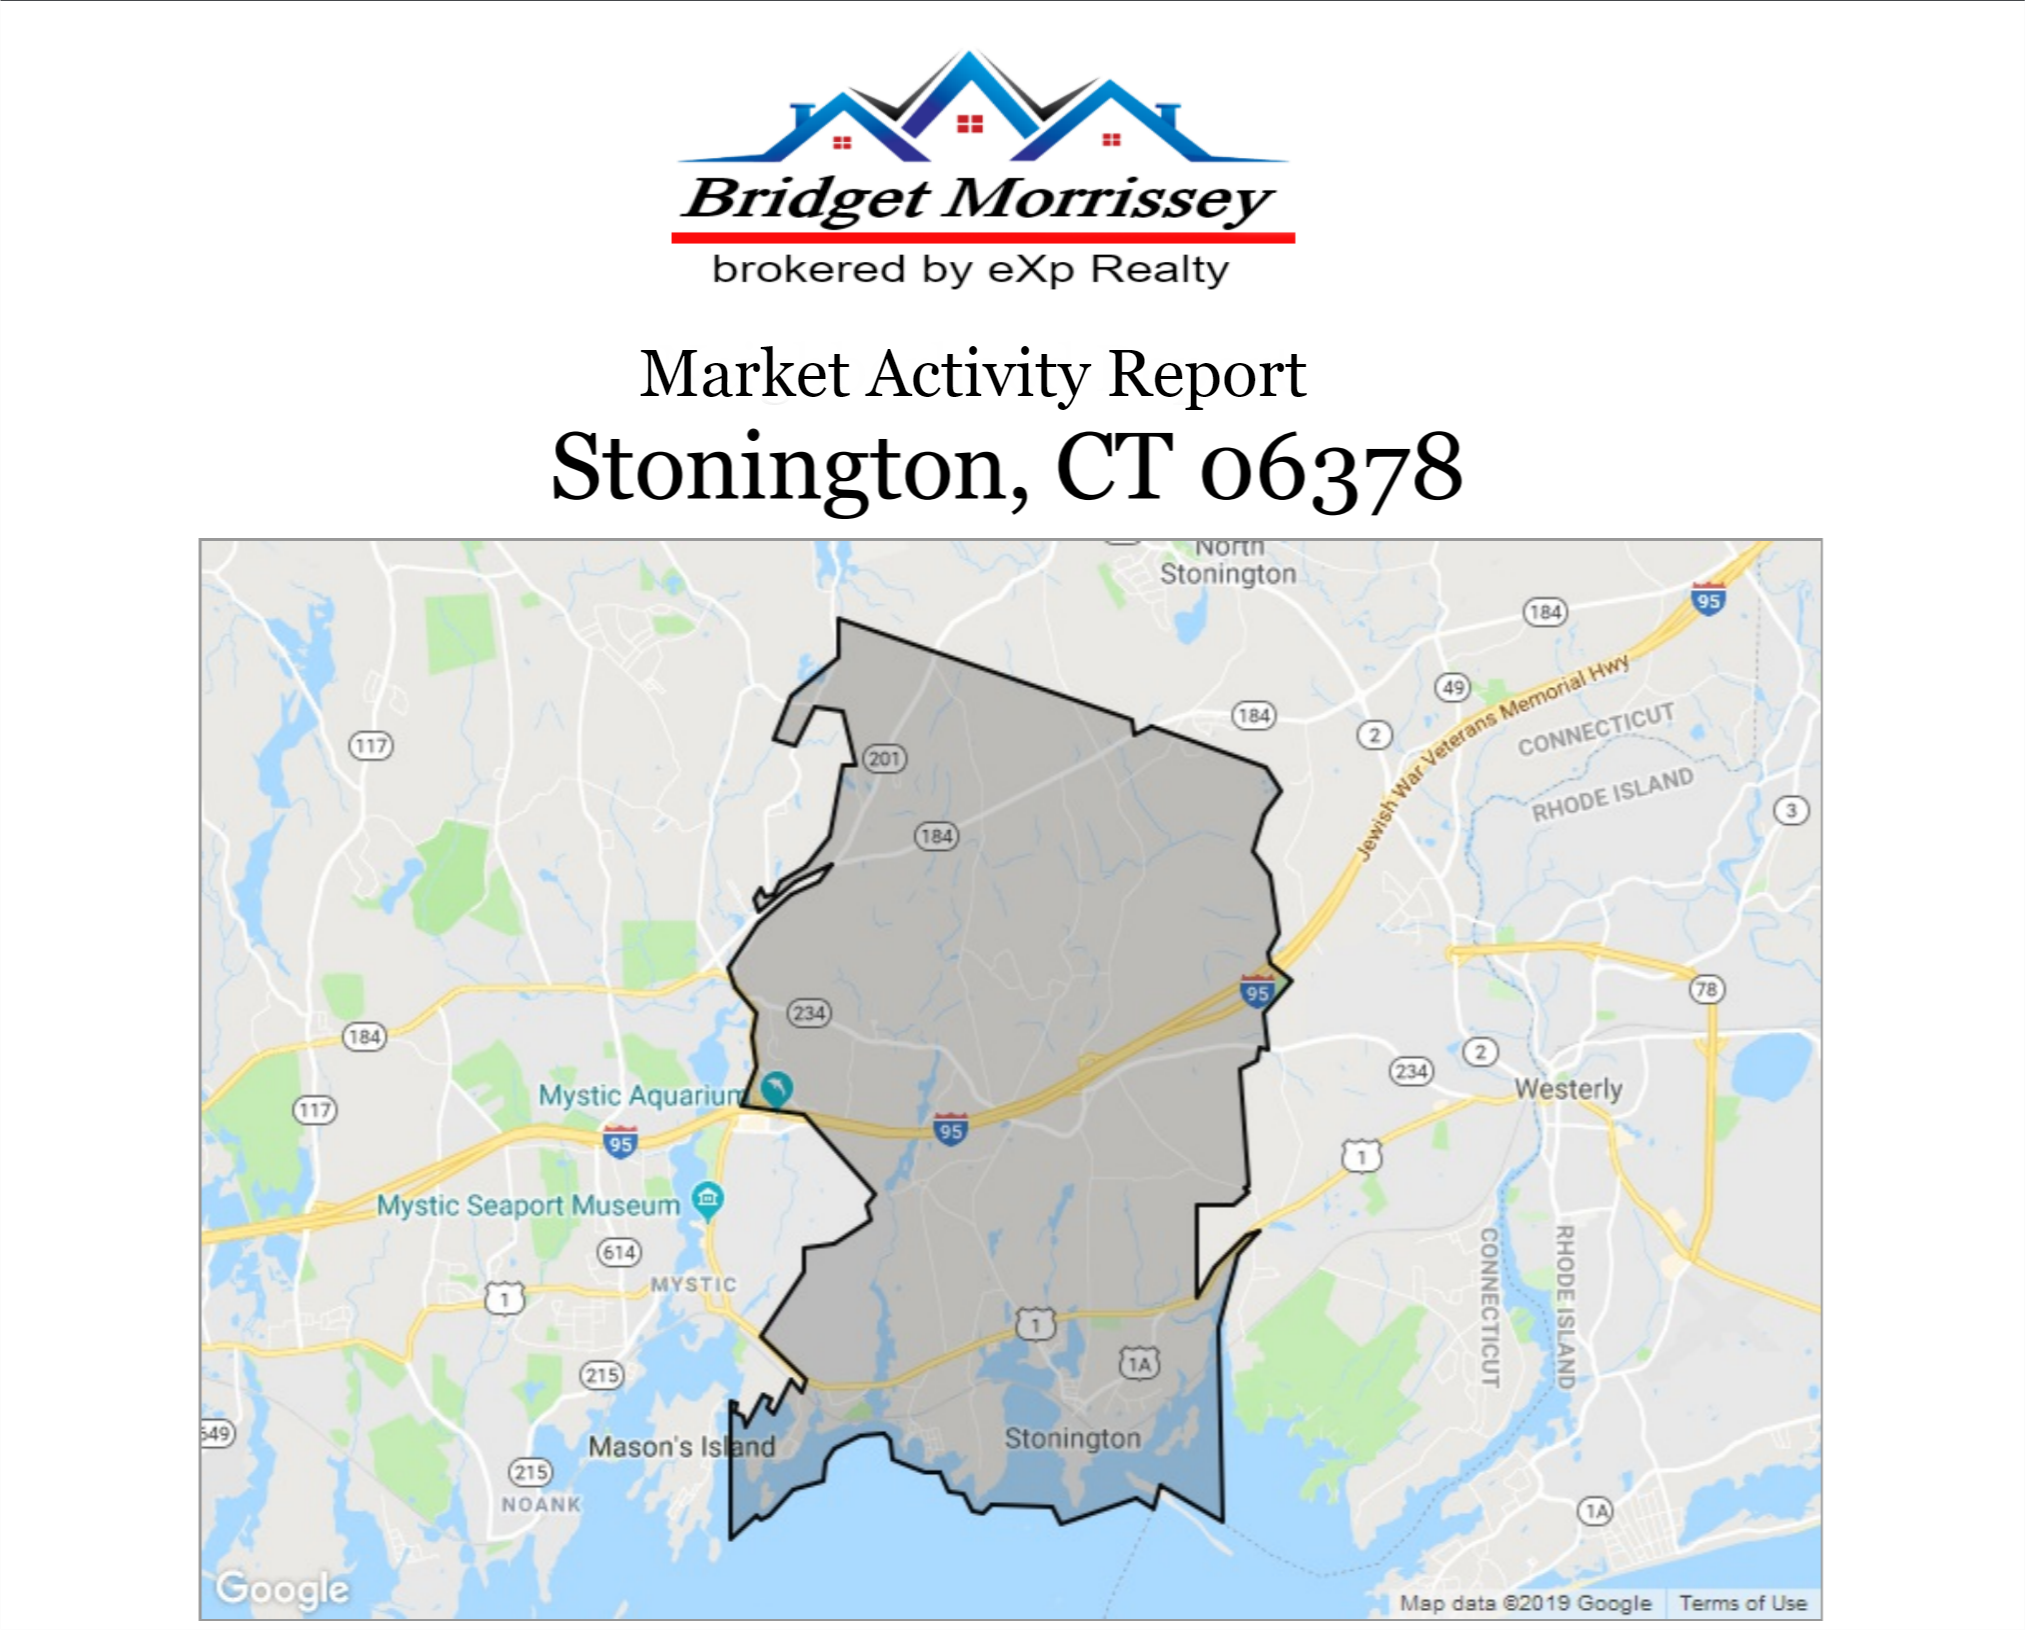 Stonington Real Estate Agent Bridget Morrissey Stonington Real Estate Market Report